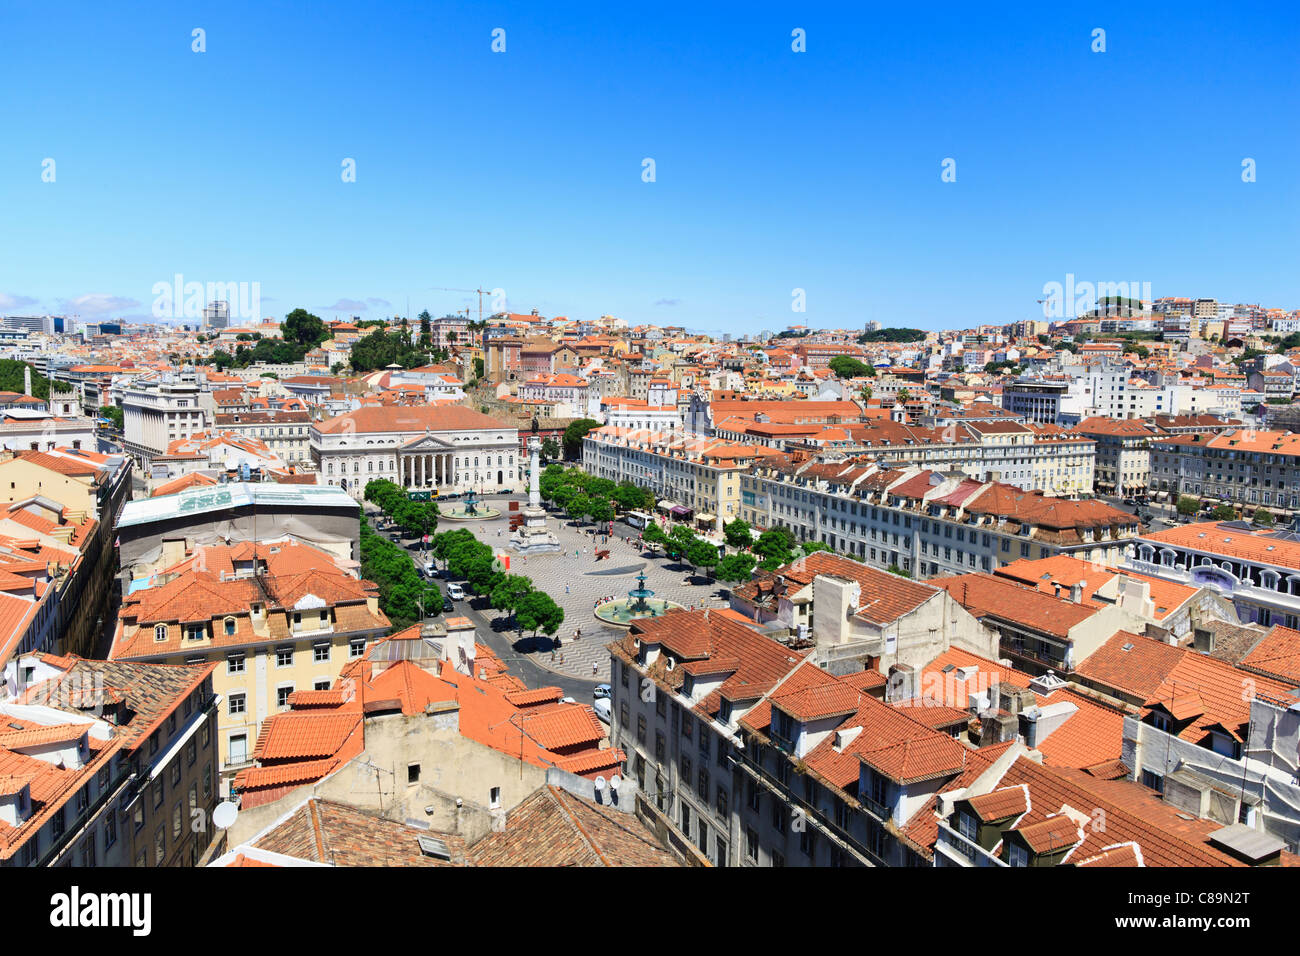 Europa, Portugal, Lisboa, vista de la plaza de la ciudad con estatua de Dom Pedro IV Foto de stock